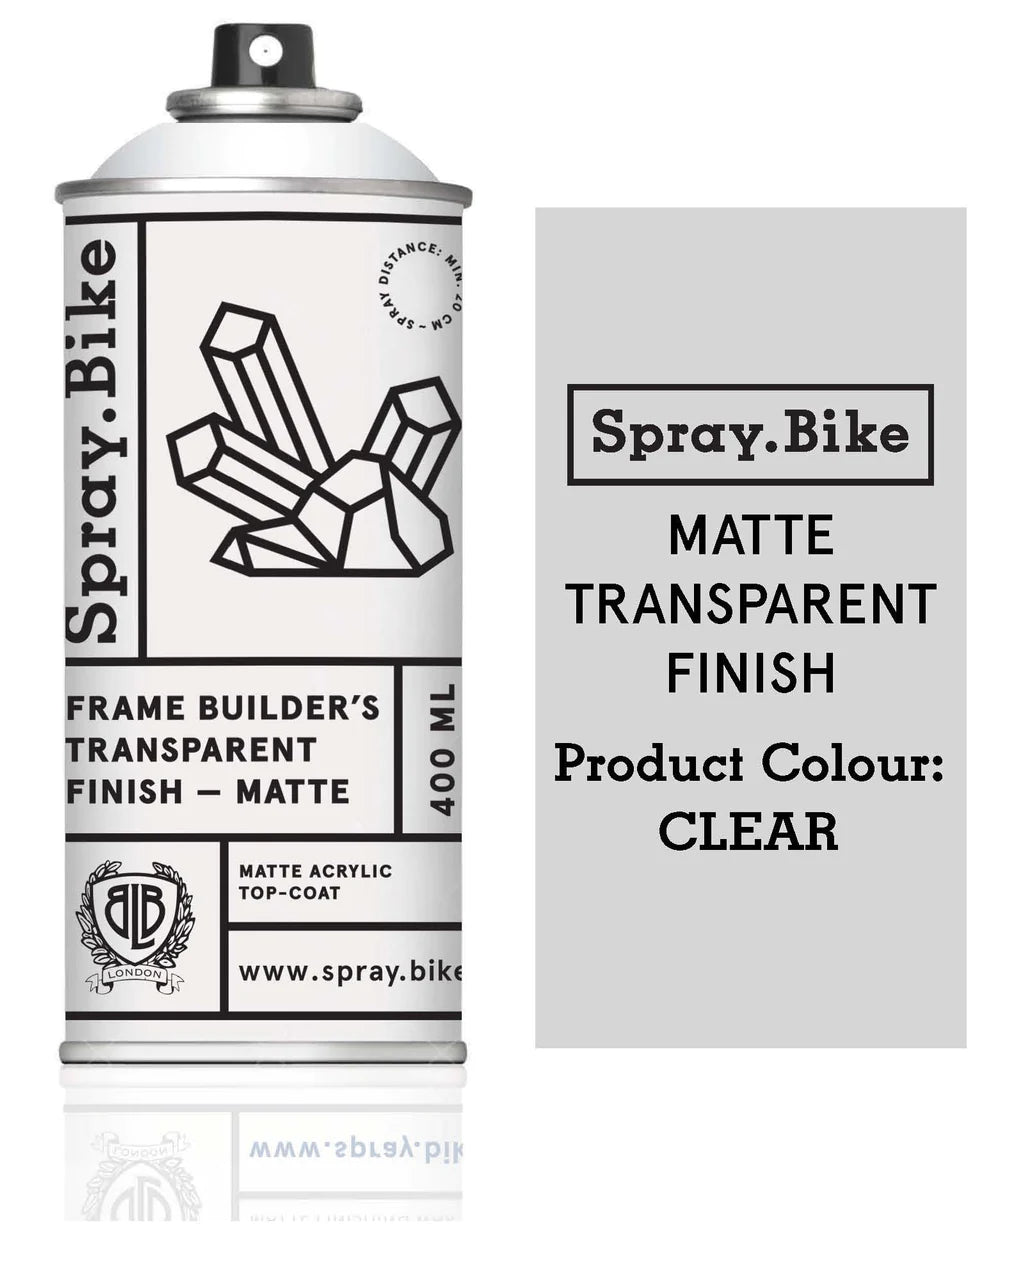 Spray.Bike - 400ml Transparent Finish Matte